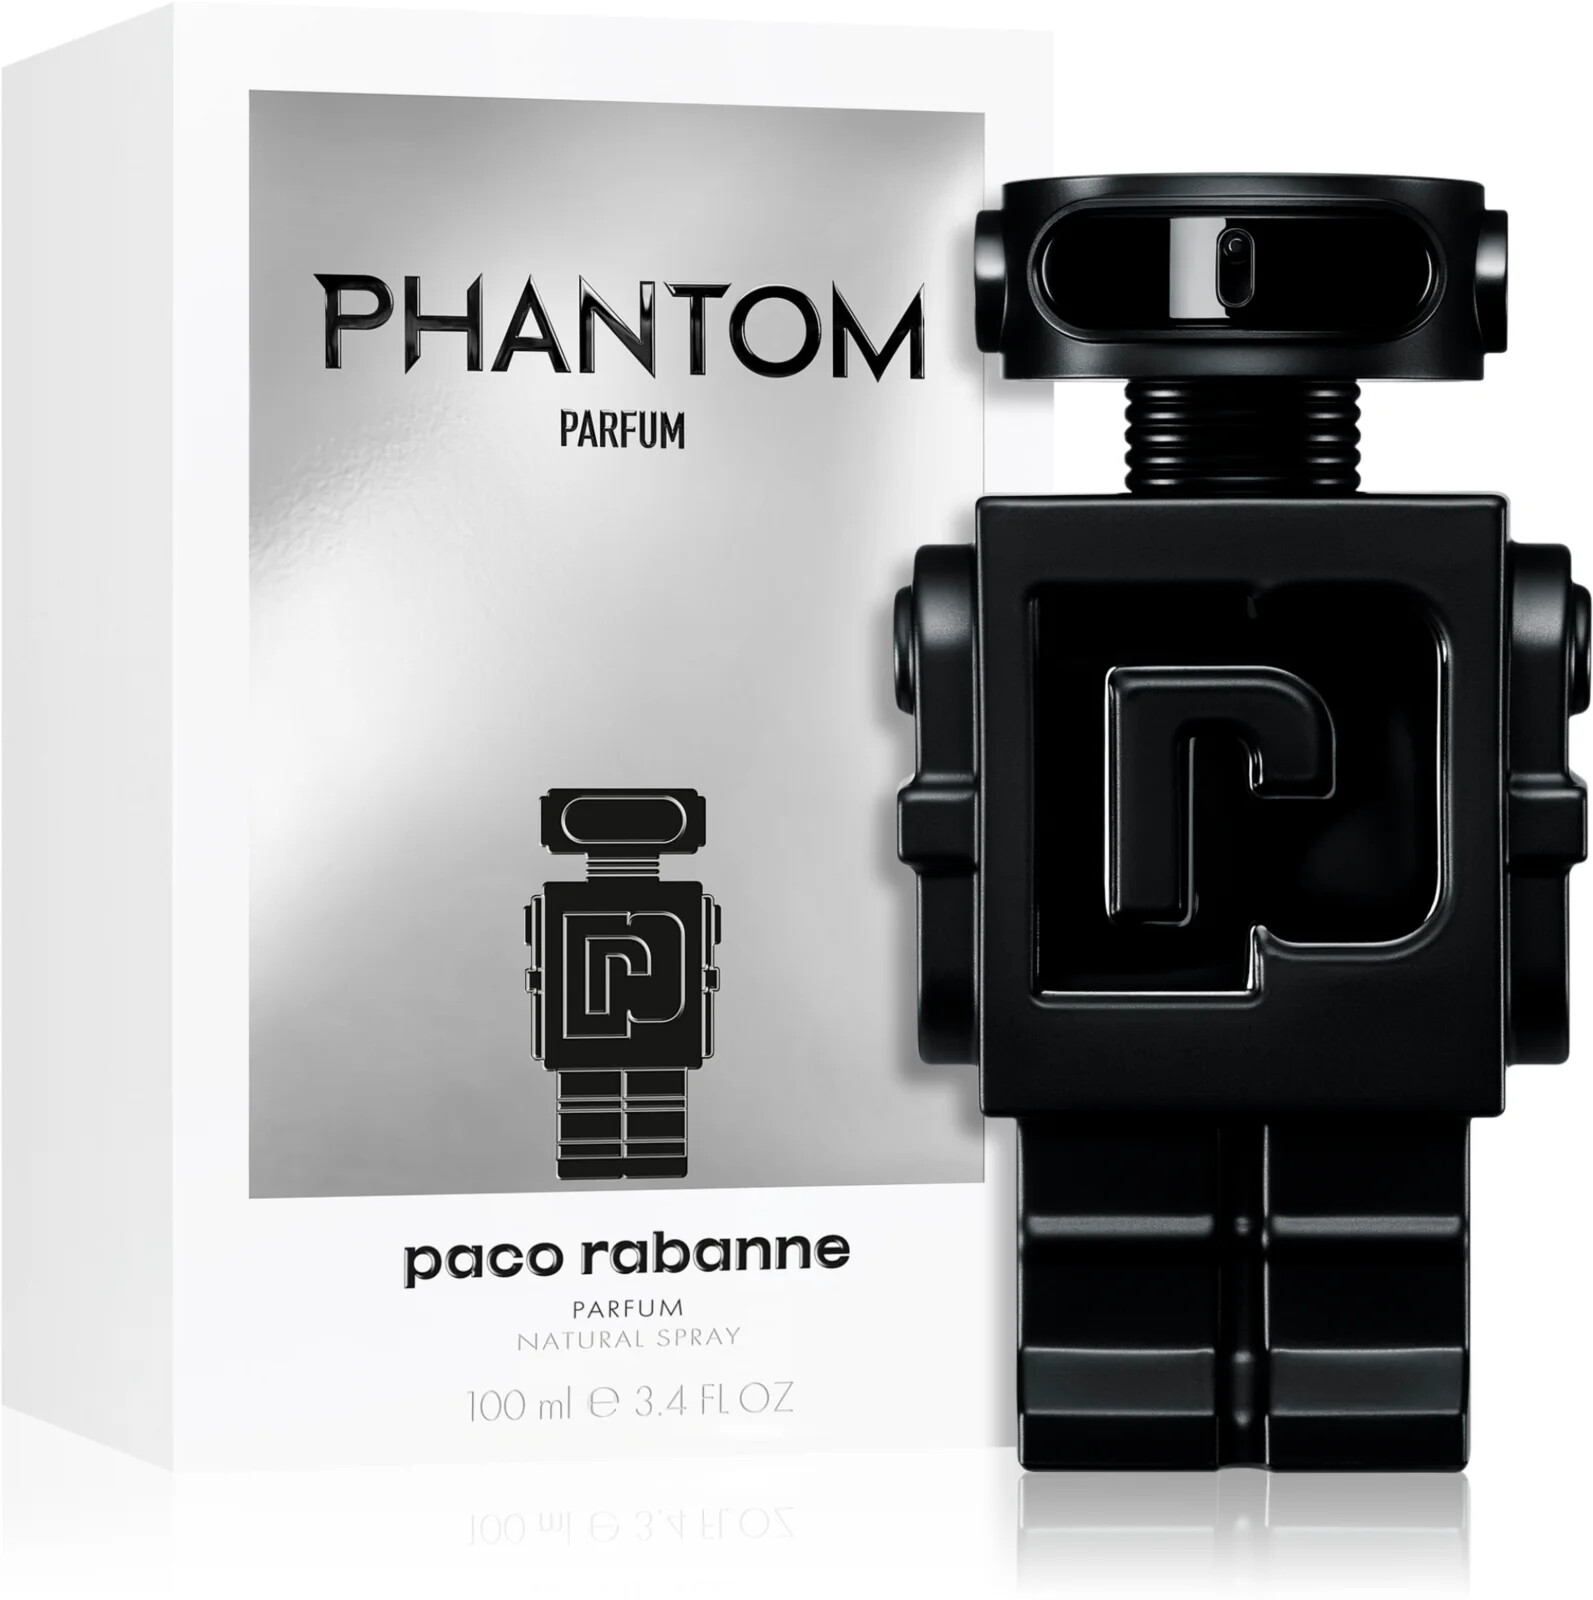 Paco Rabanne Phantom Parfum parfém pro muže 100 ml